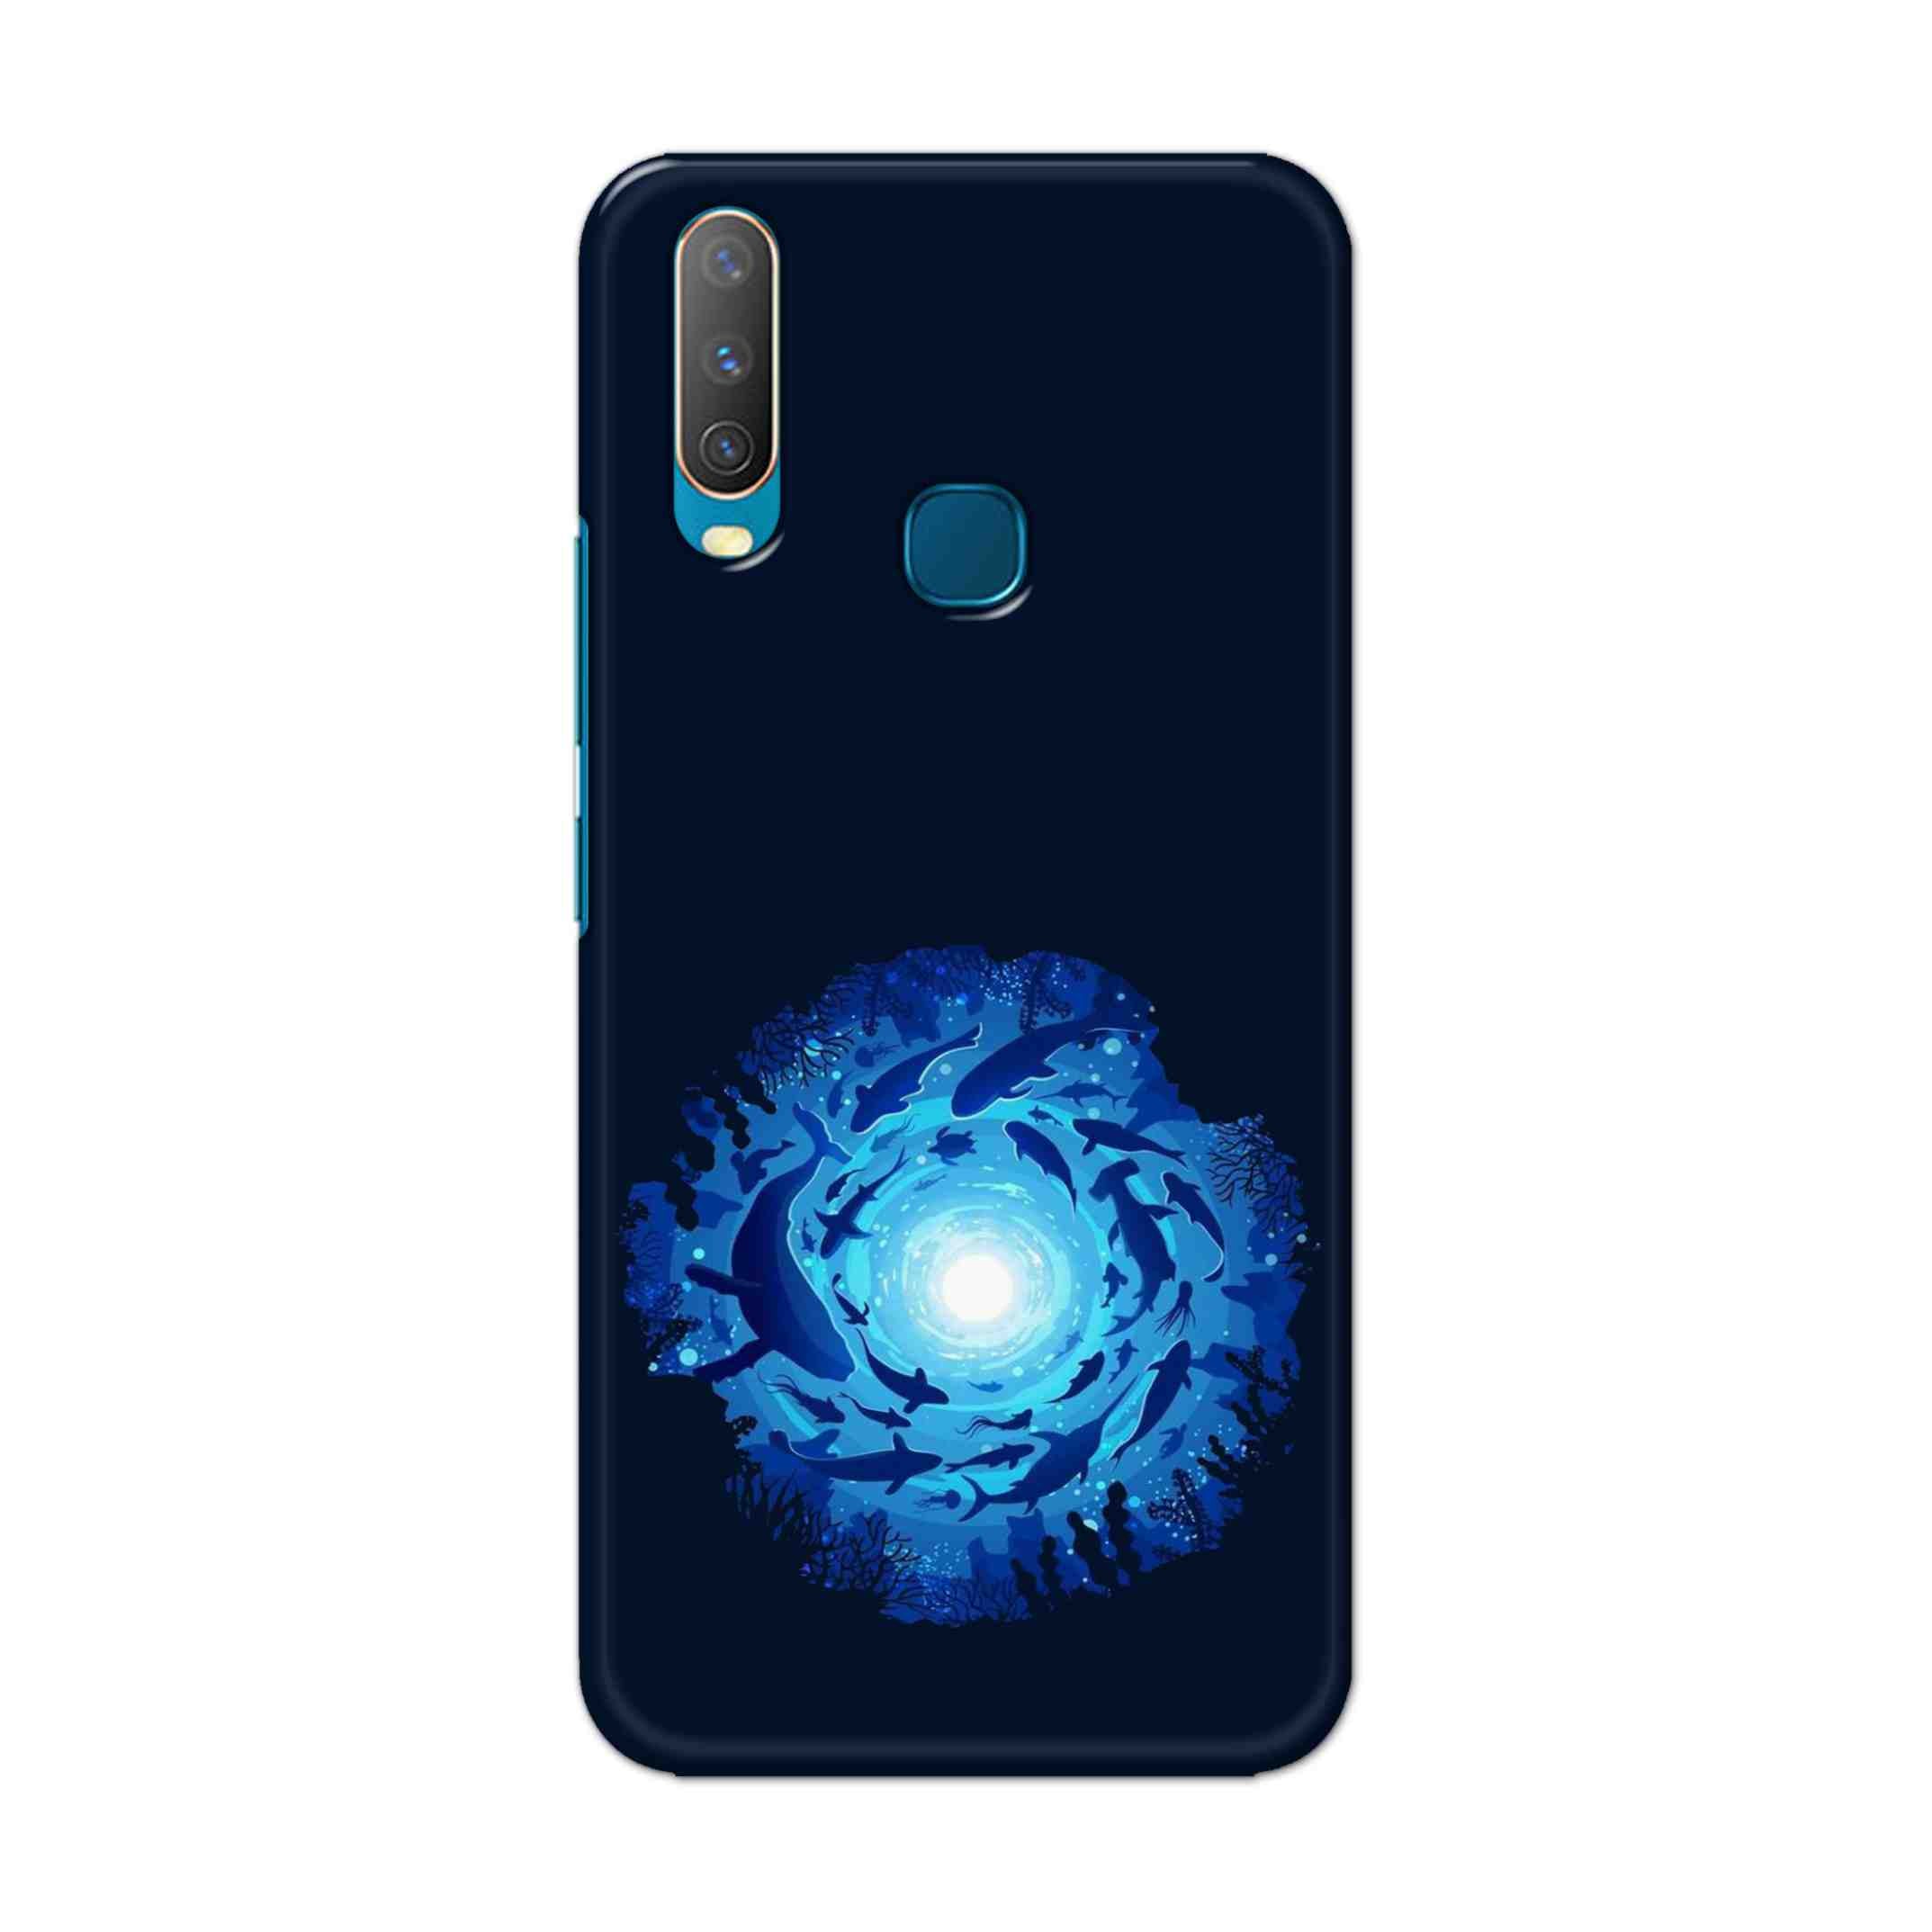 Buy Blue Whale Hard Back Mobile Phone Case Cover For Vivo Y17 / U10 Online